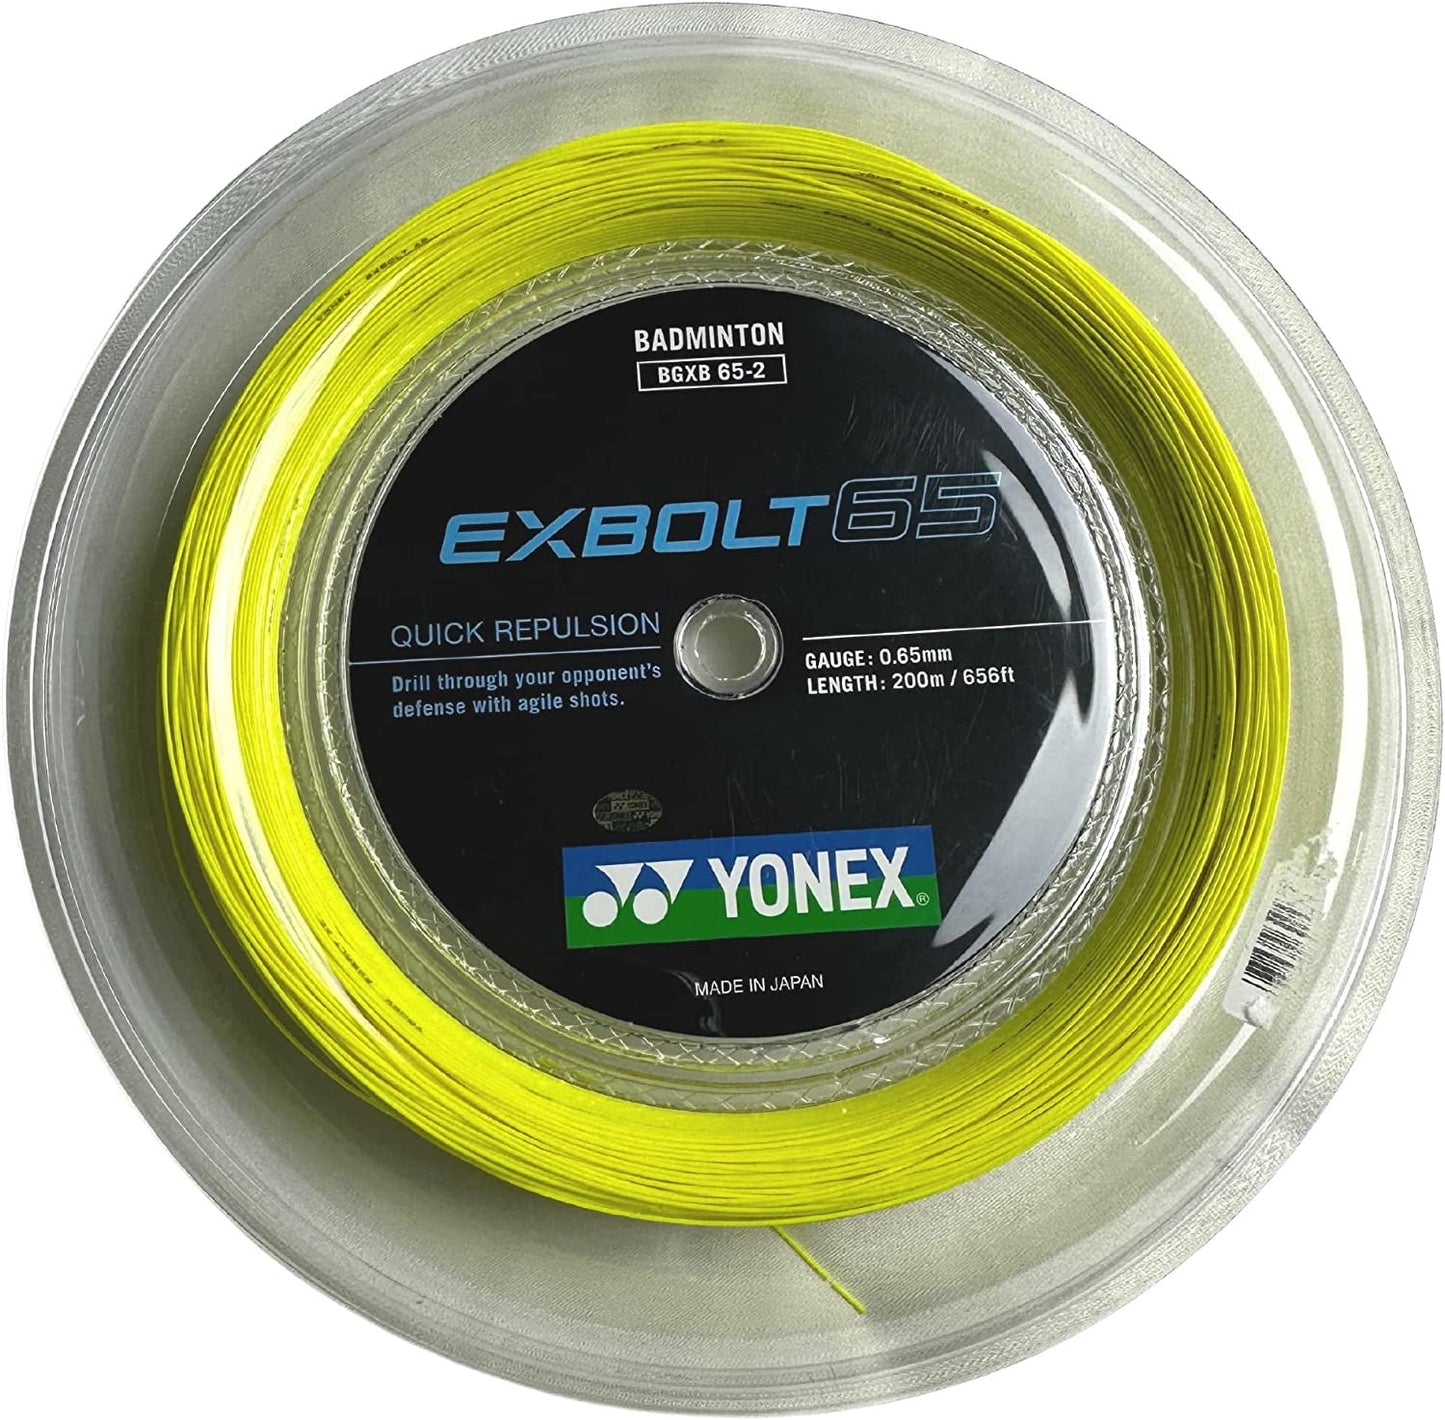 Yonex EXBOLT 65 Badminton String - 200m Reel Yellow